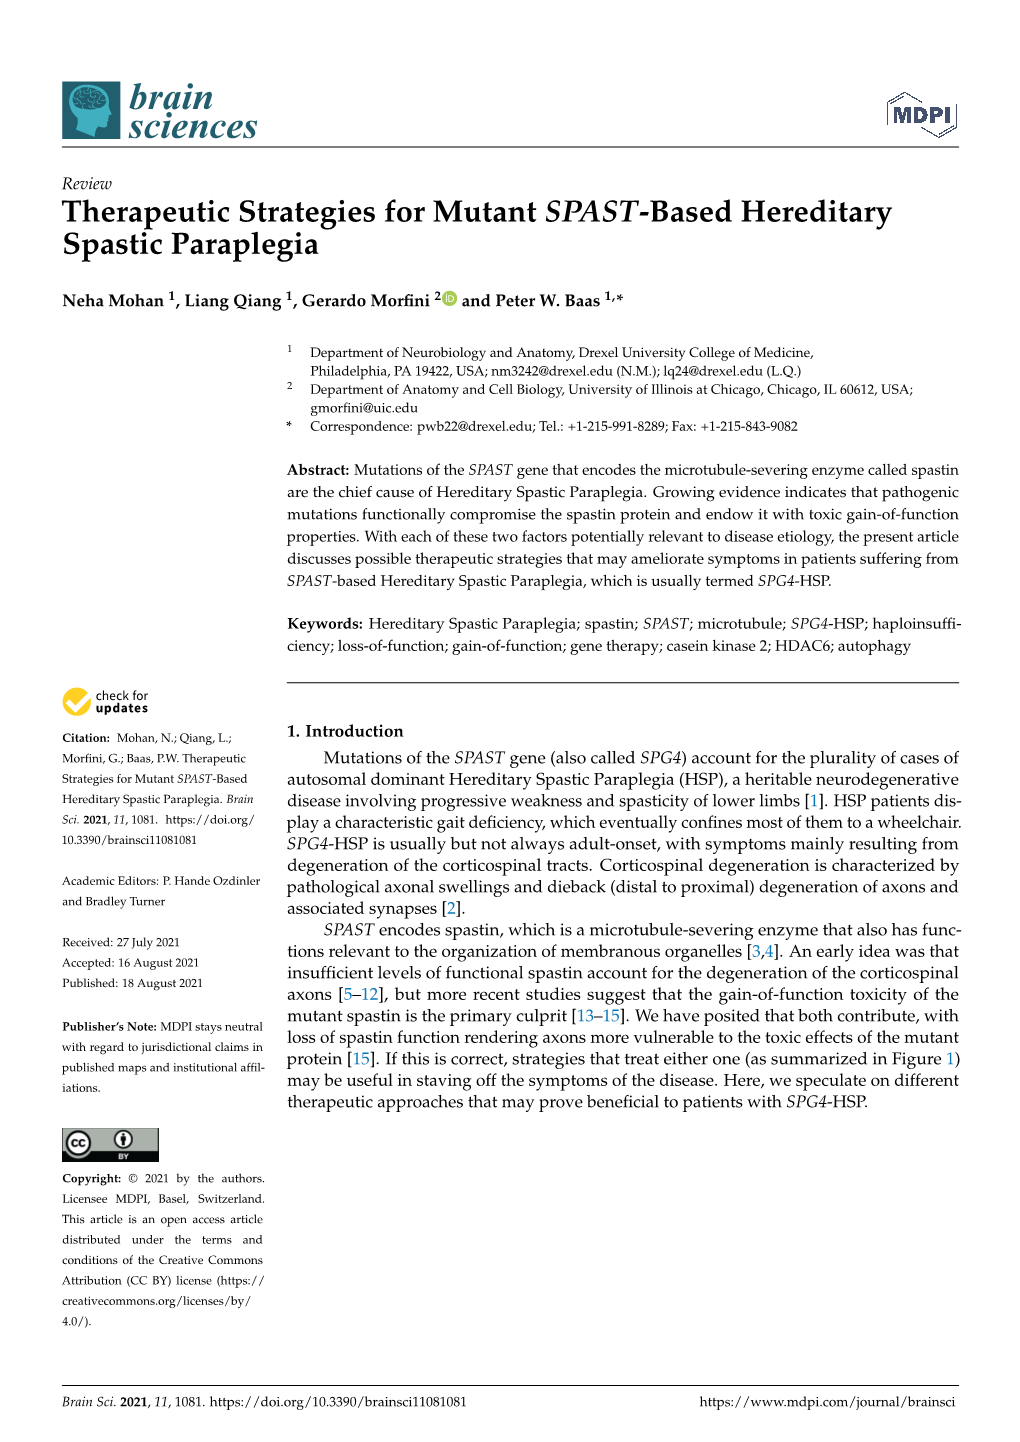 Therapeutic Strategies for Mutant SPAST-Based Hereditary Spastic Paraplegia